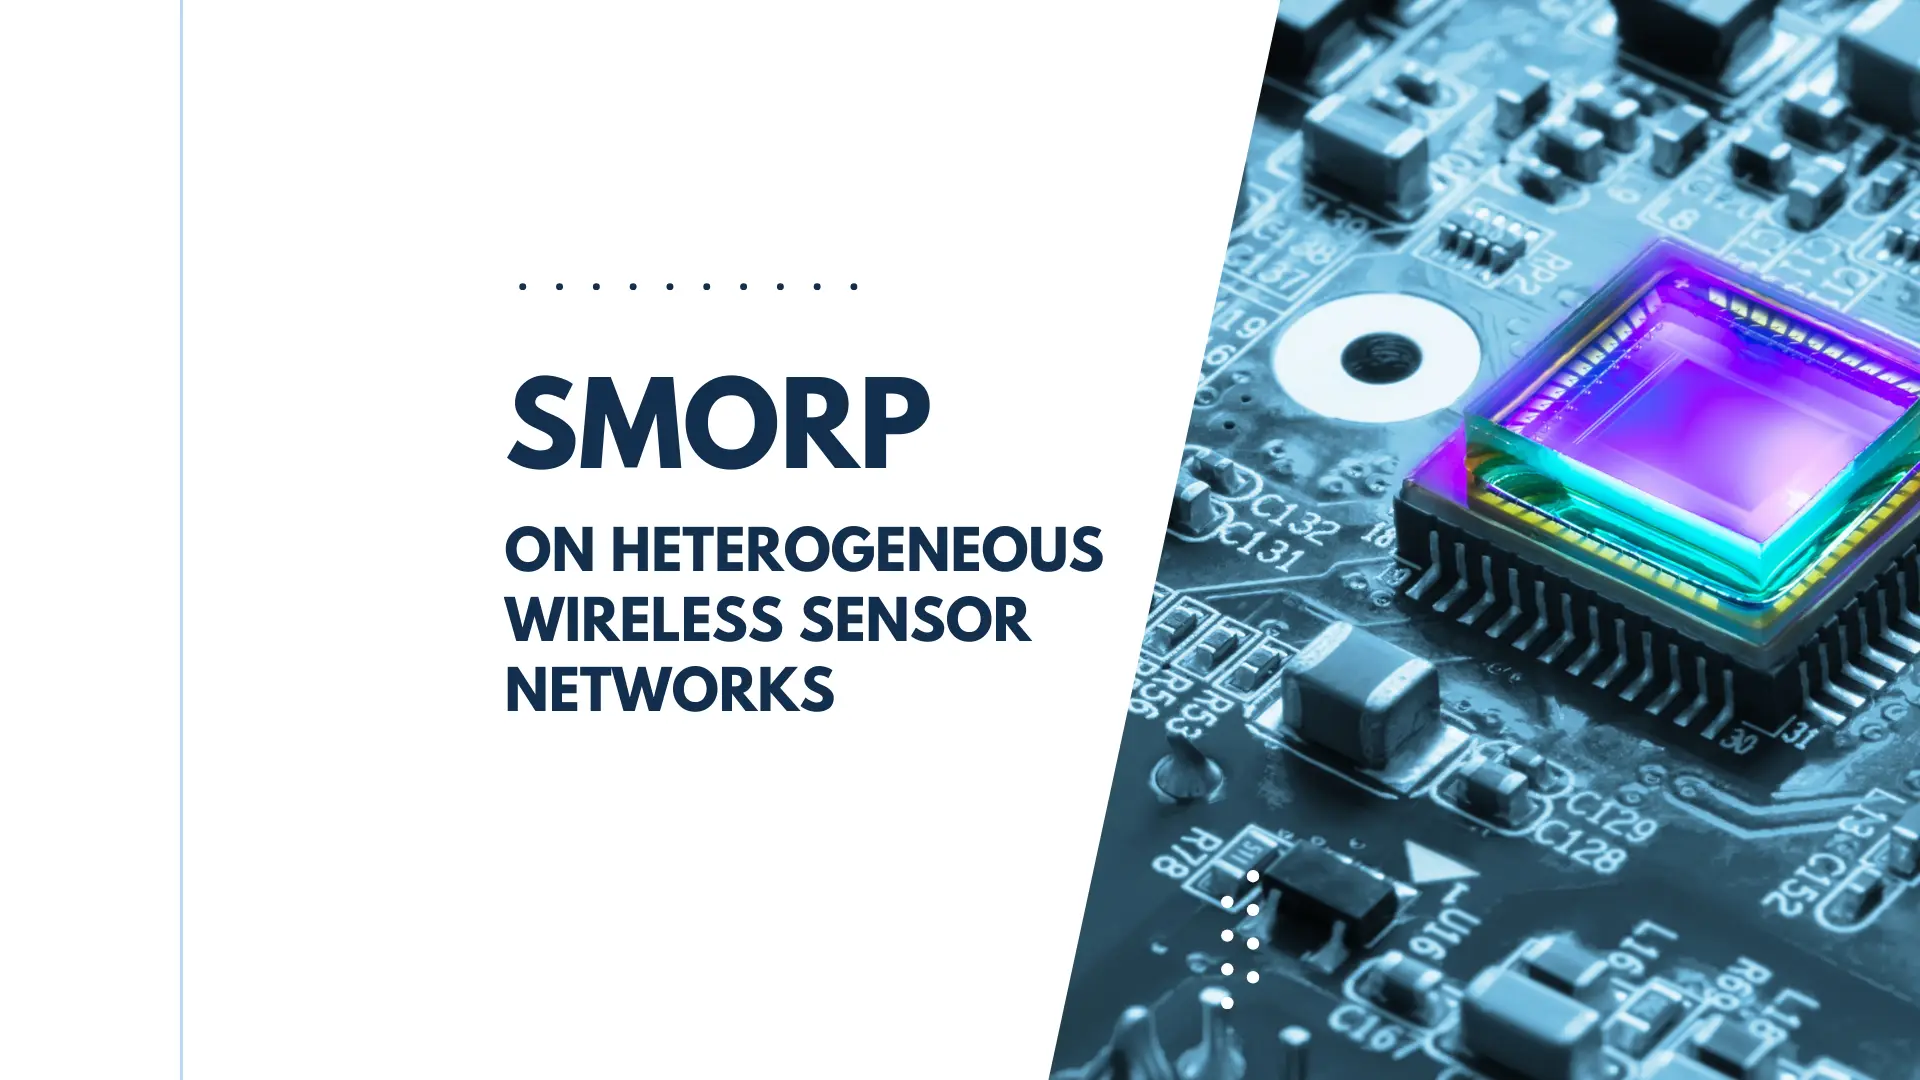 SMORP on heterogeneous wireless sensor networks